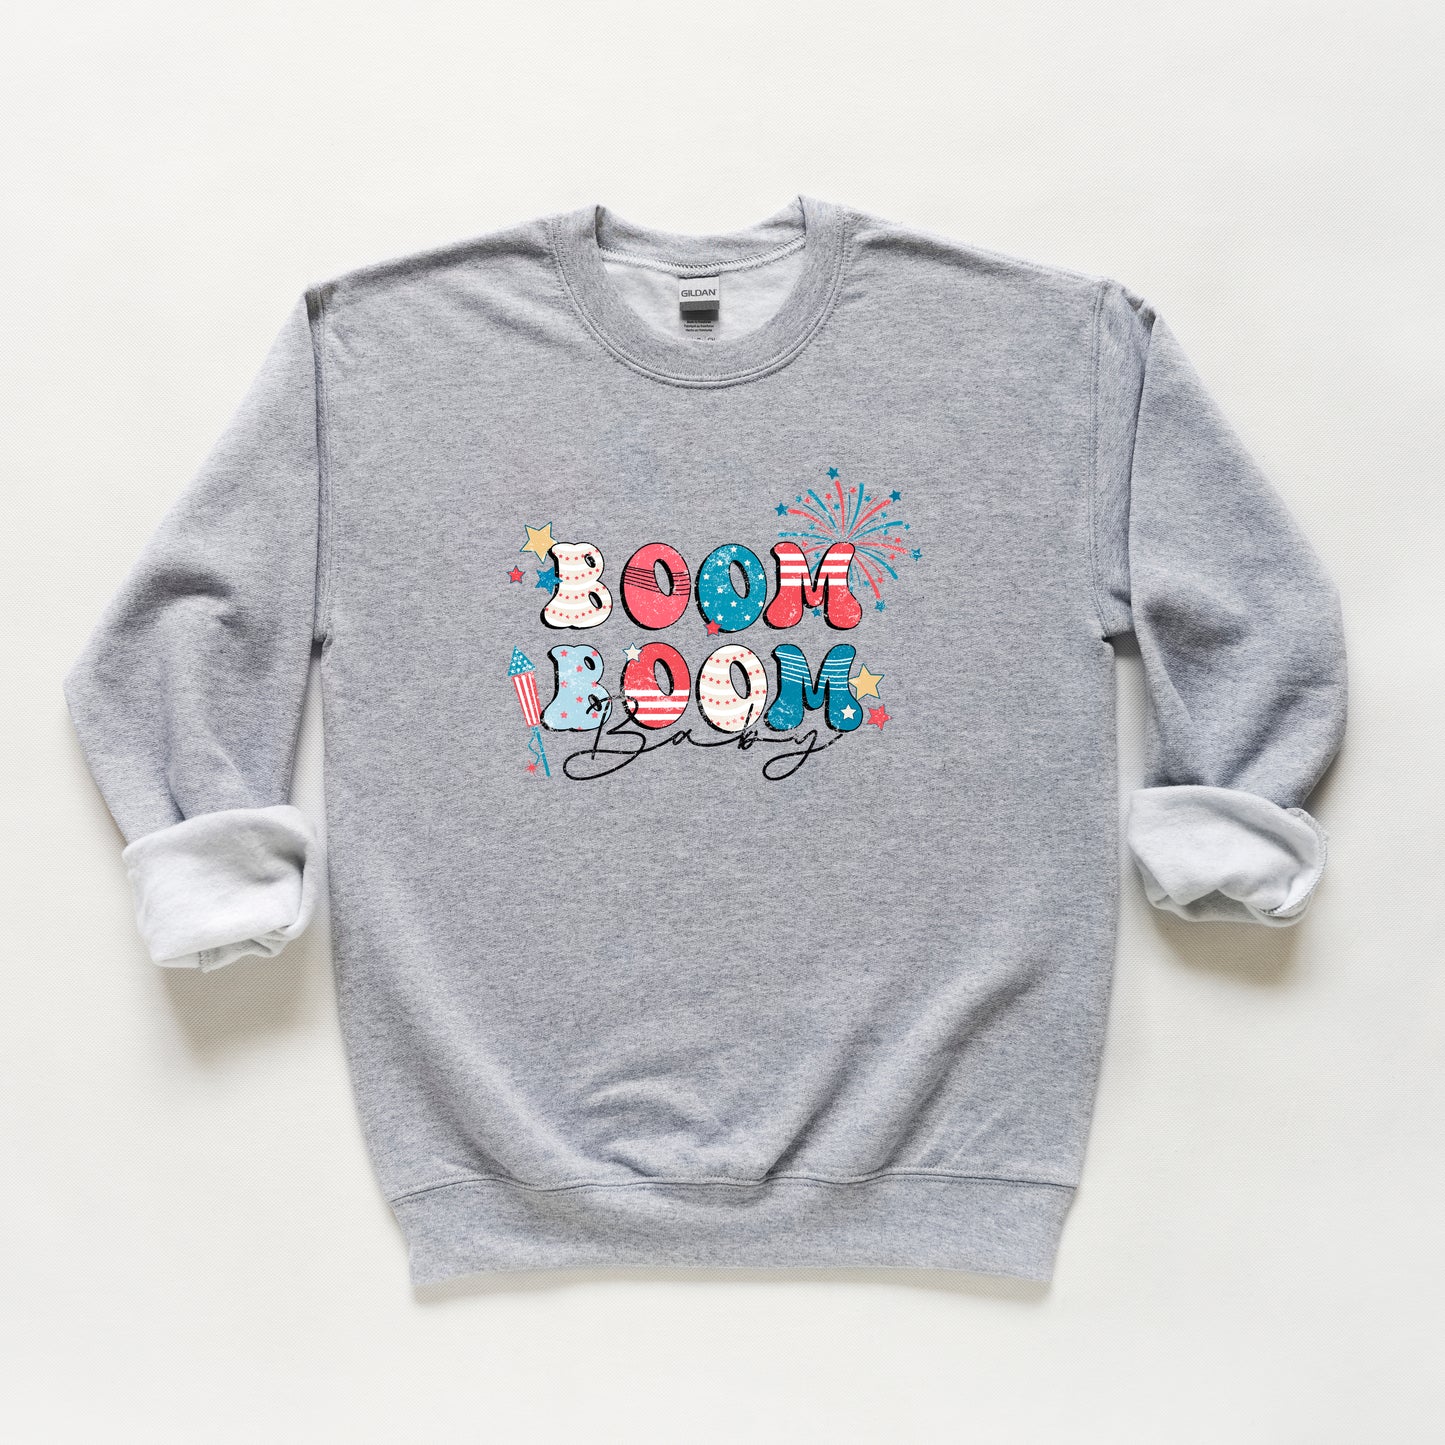 Boom Boom Baby | Youth Sweatshirt